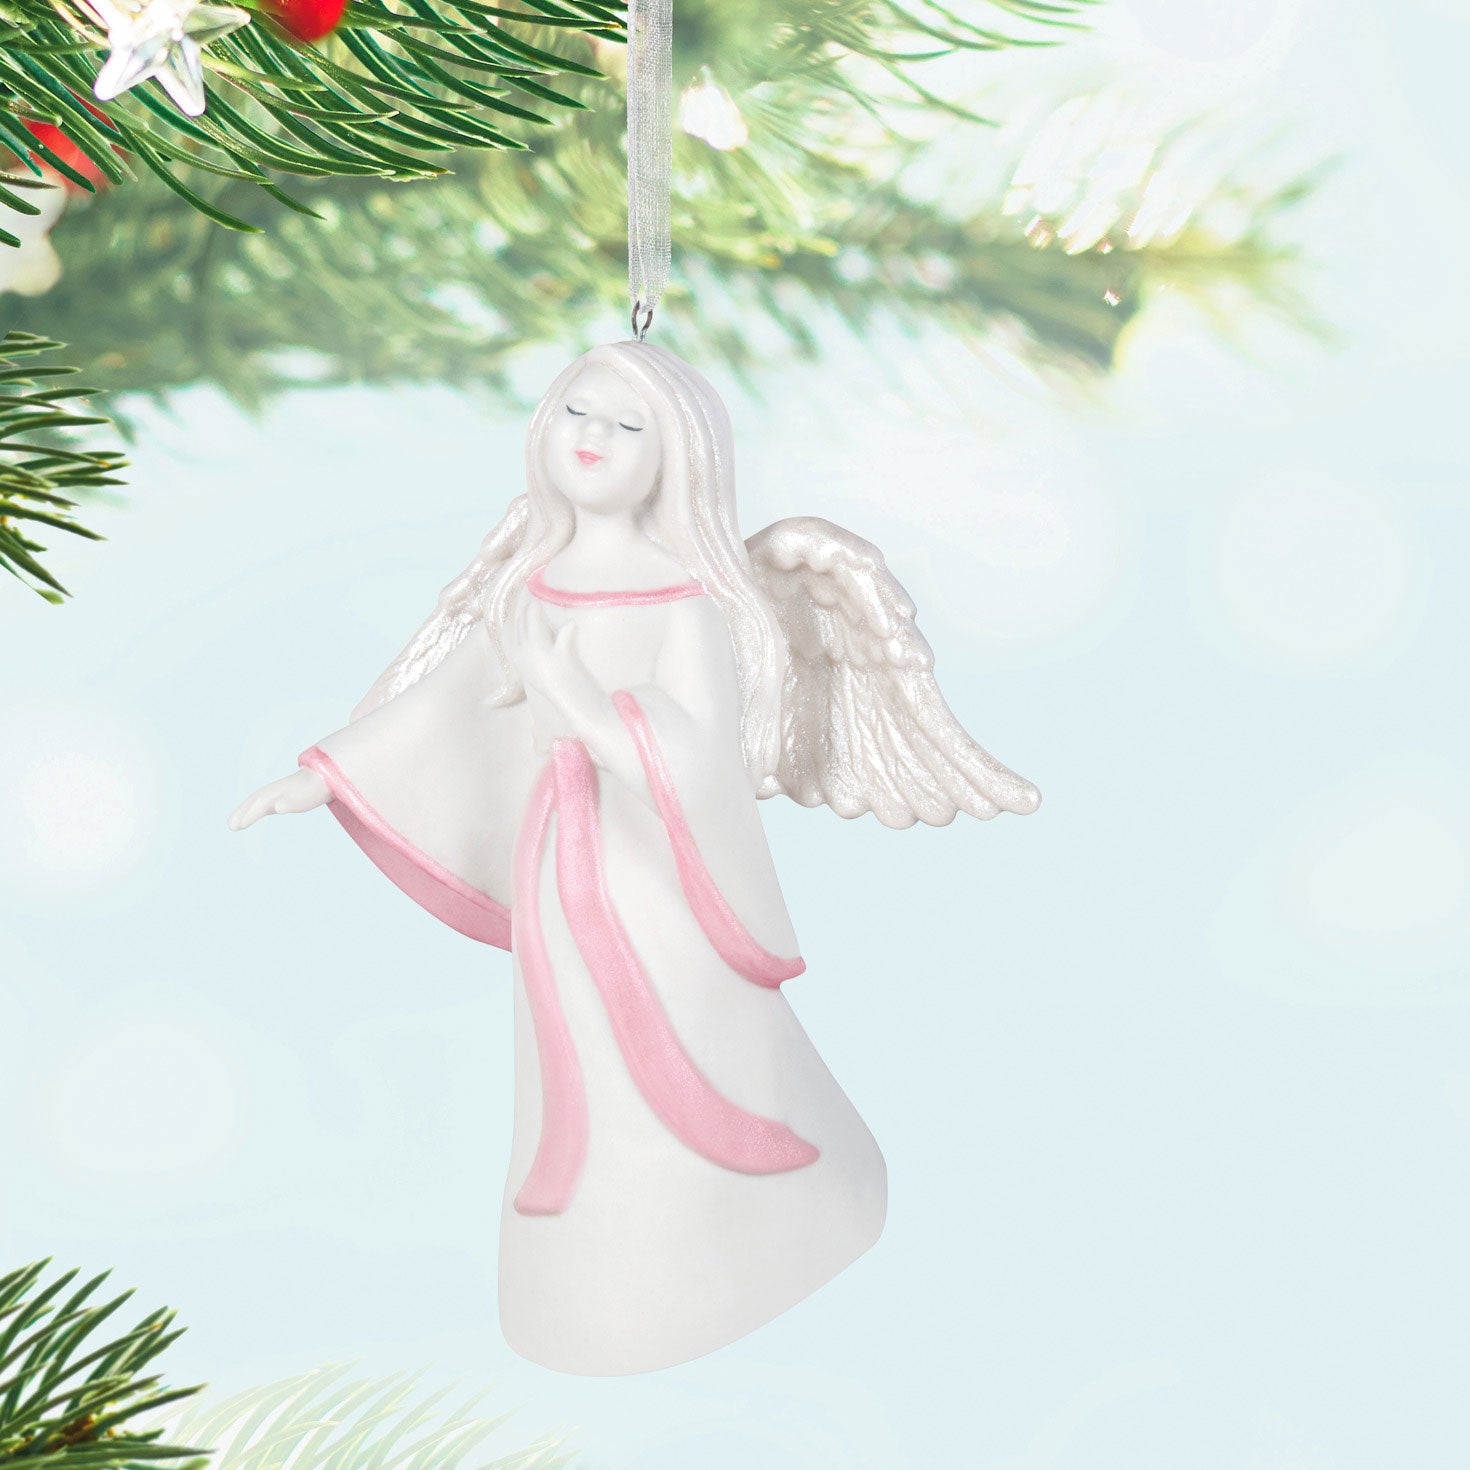 Hallmark Angel of Healing Porcelain Ornament Benefiting Susan G. Komen®